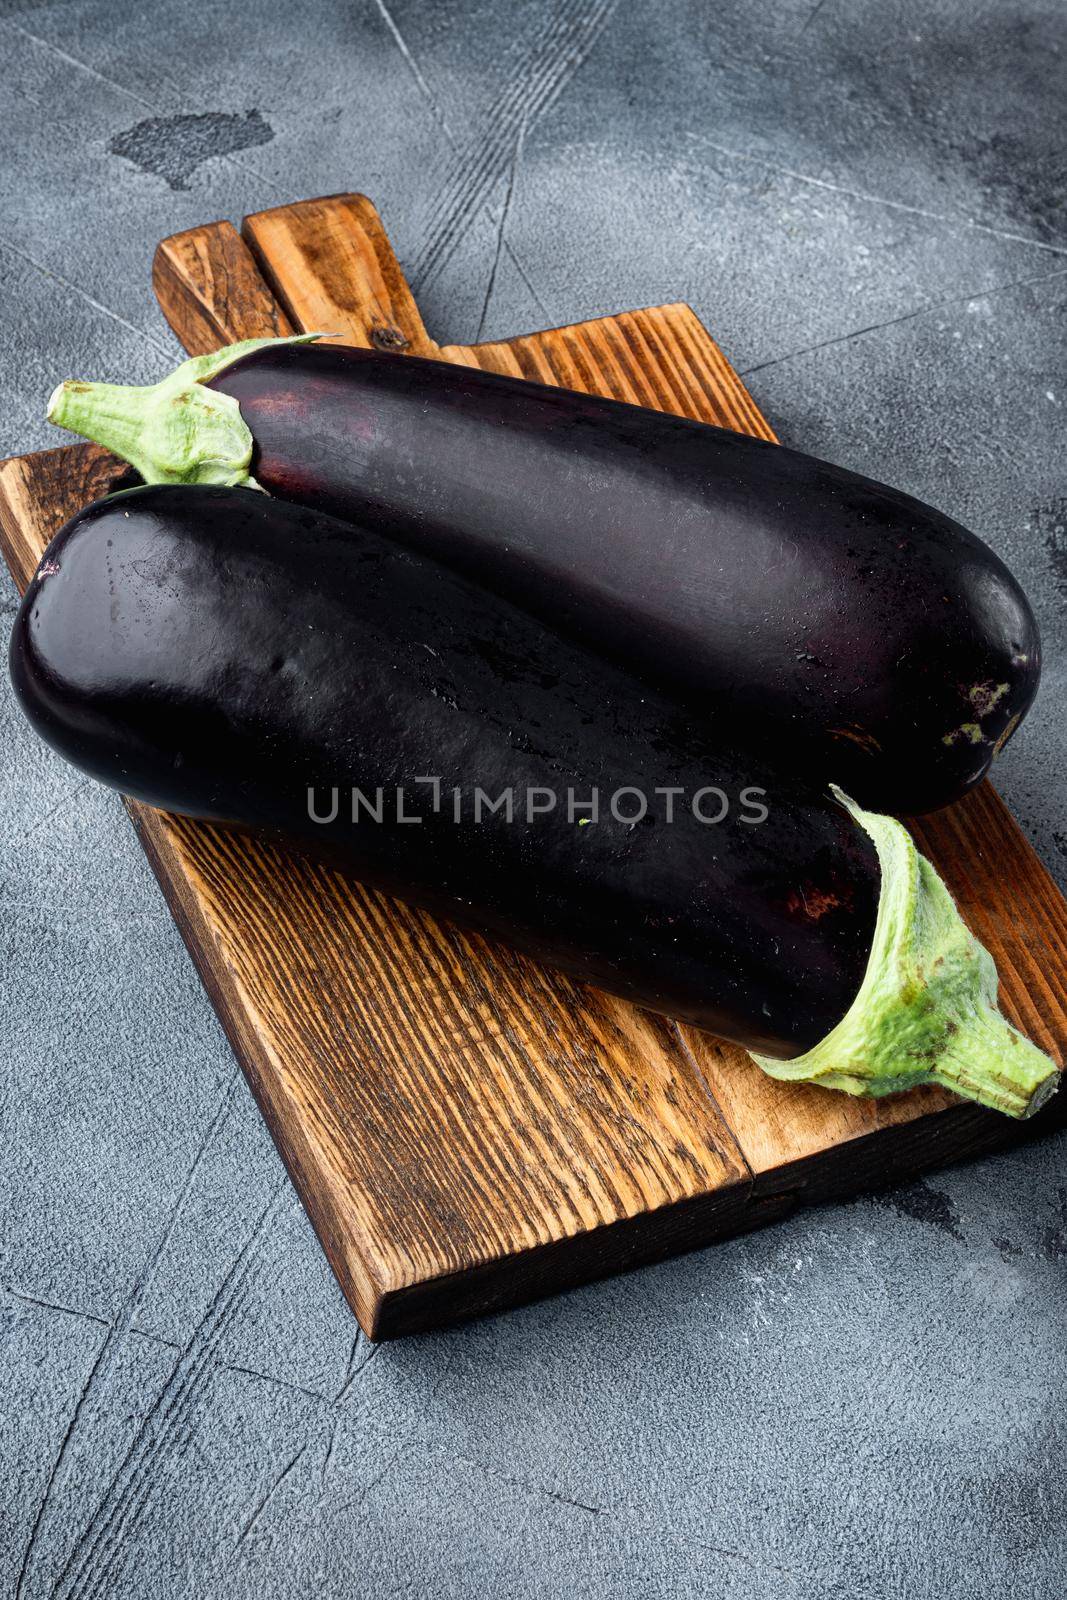 Eggplant, aubergine organic ripe whole vegetables, on gray stone background by Ilianesolenyi